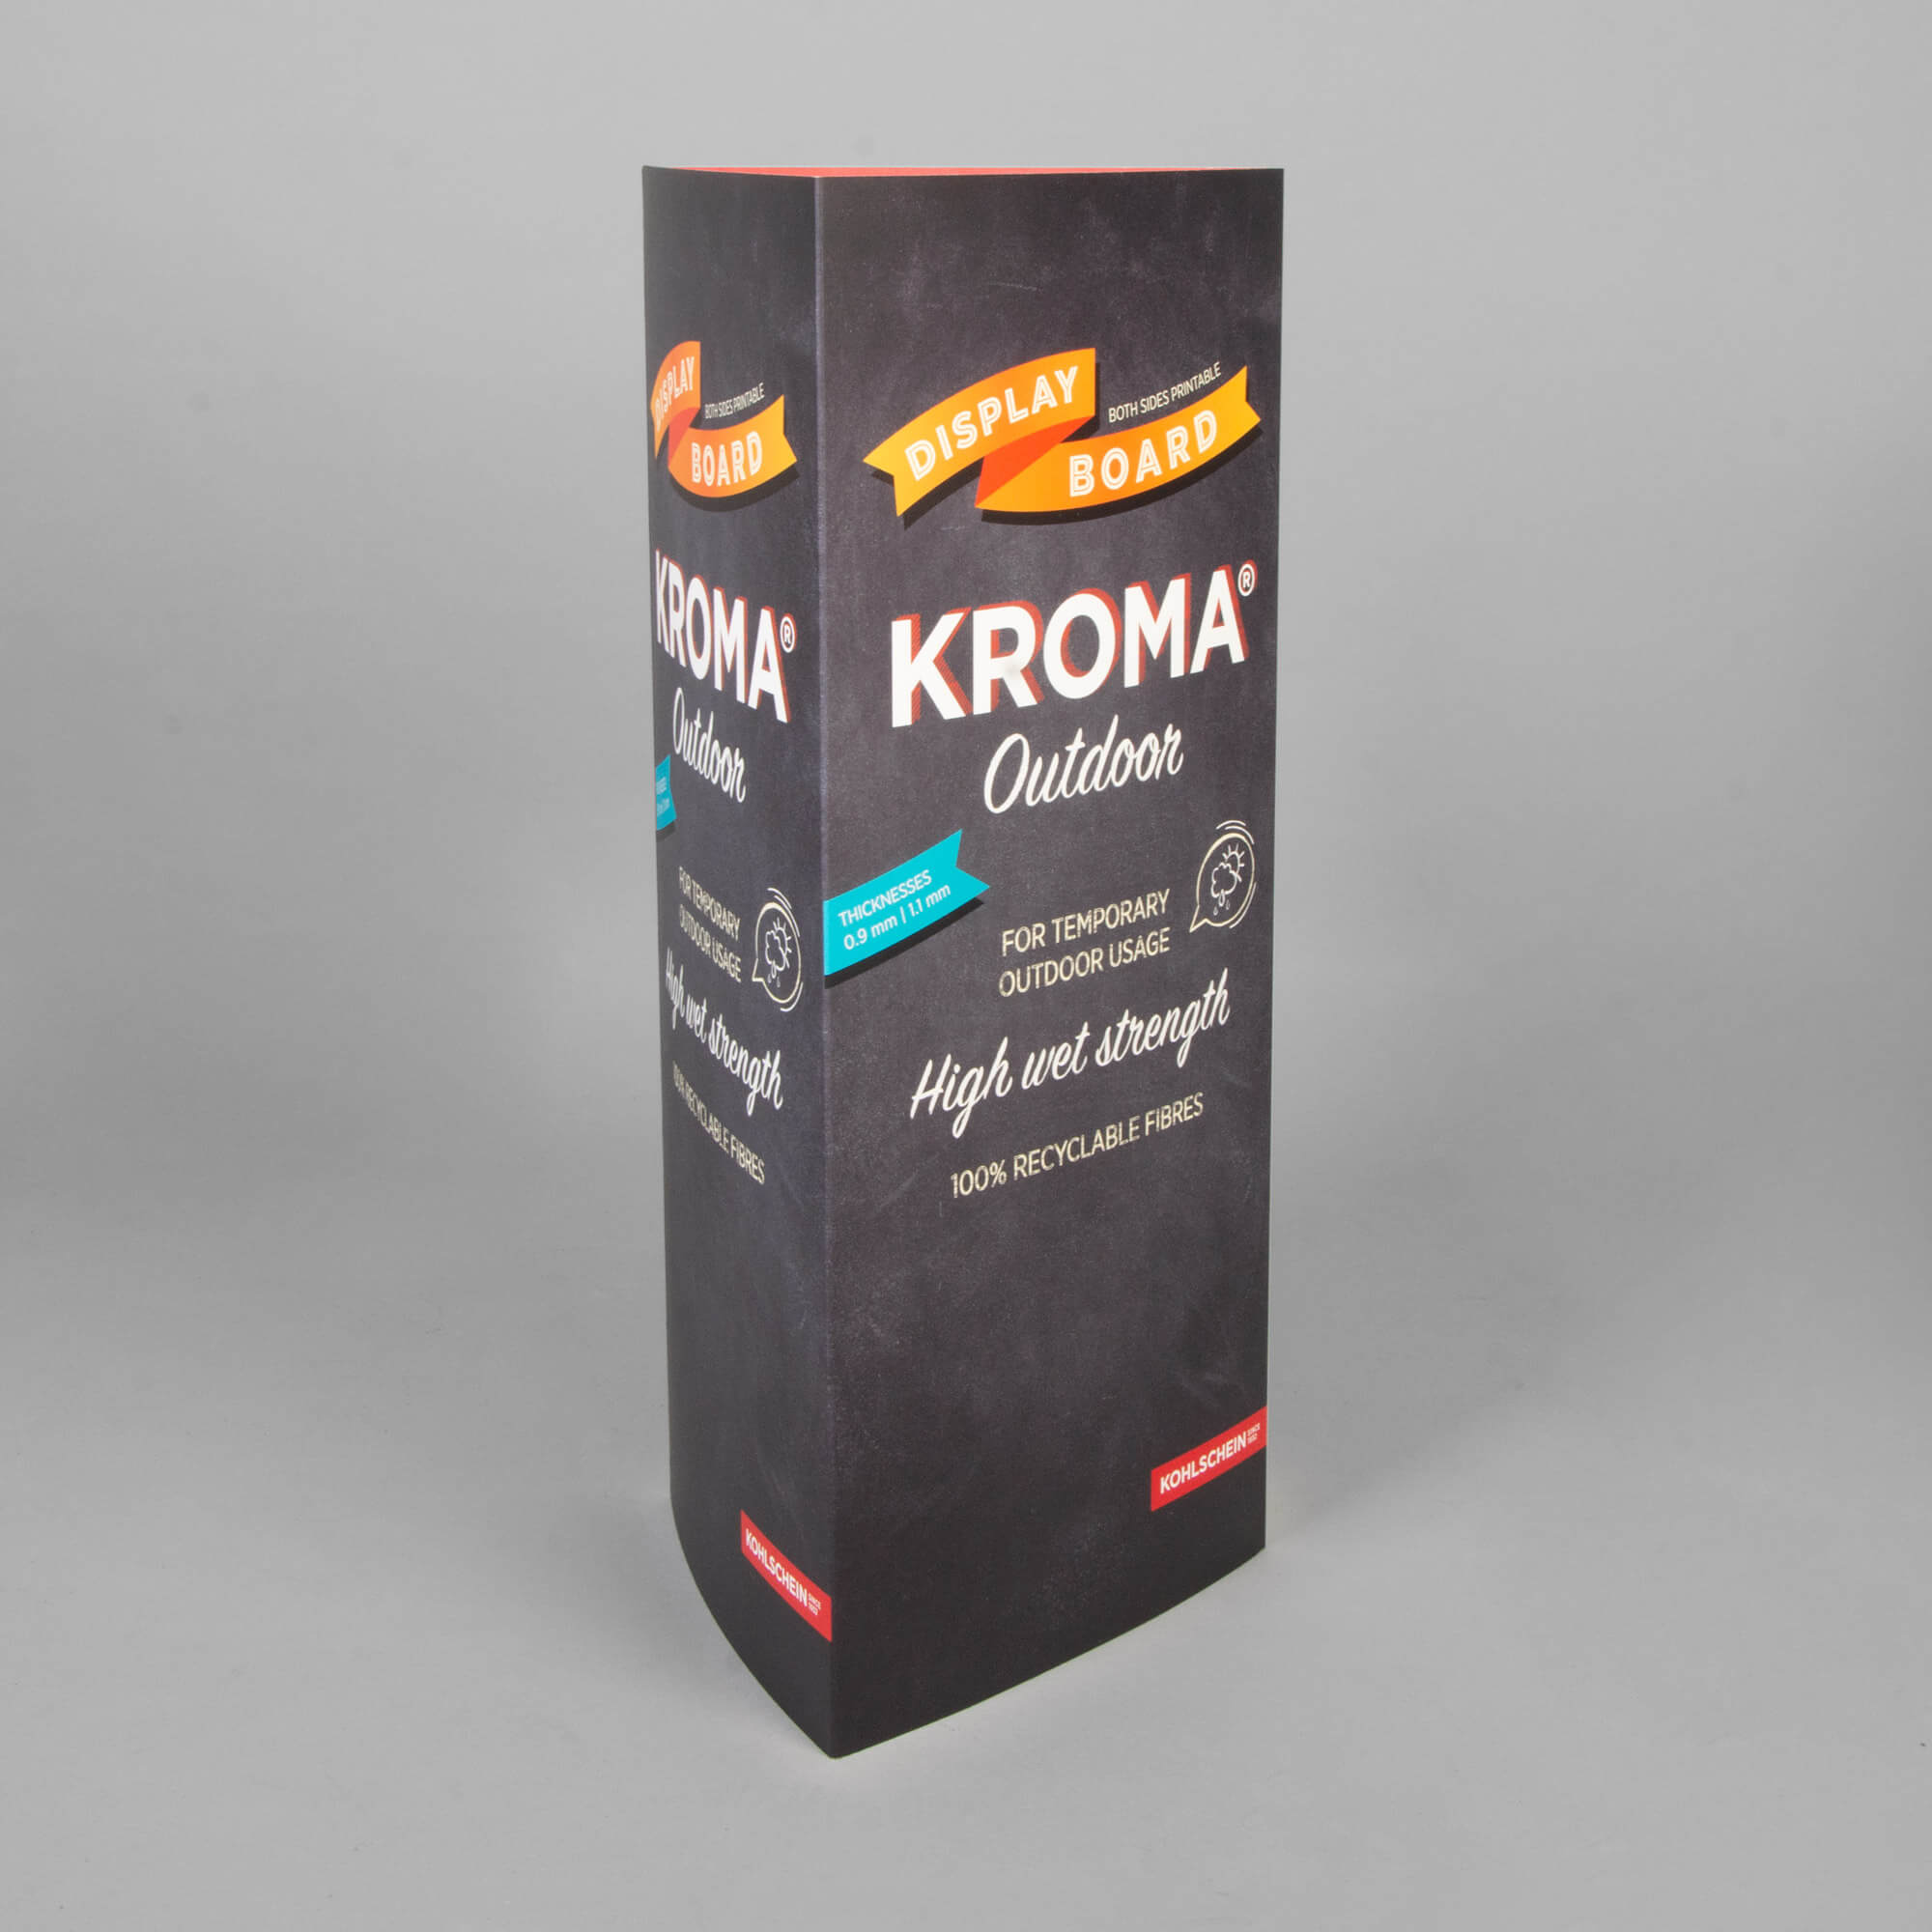 Cardboard KROMA Outdoor application example customer stopper